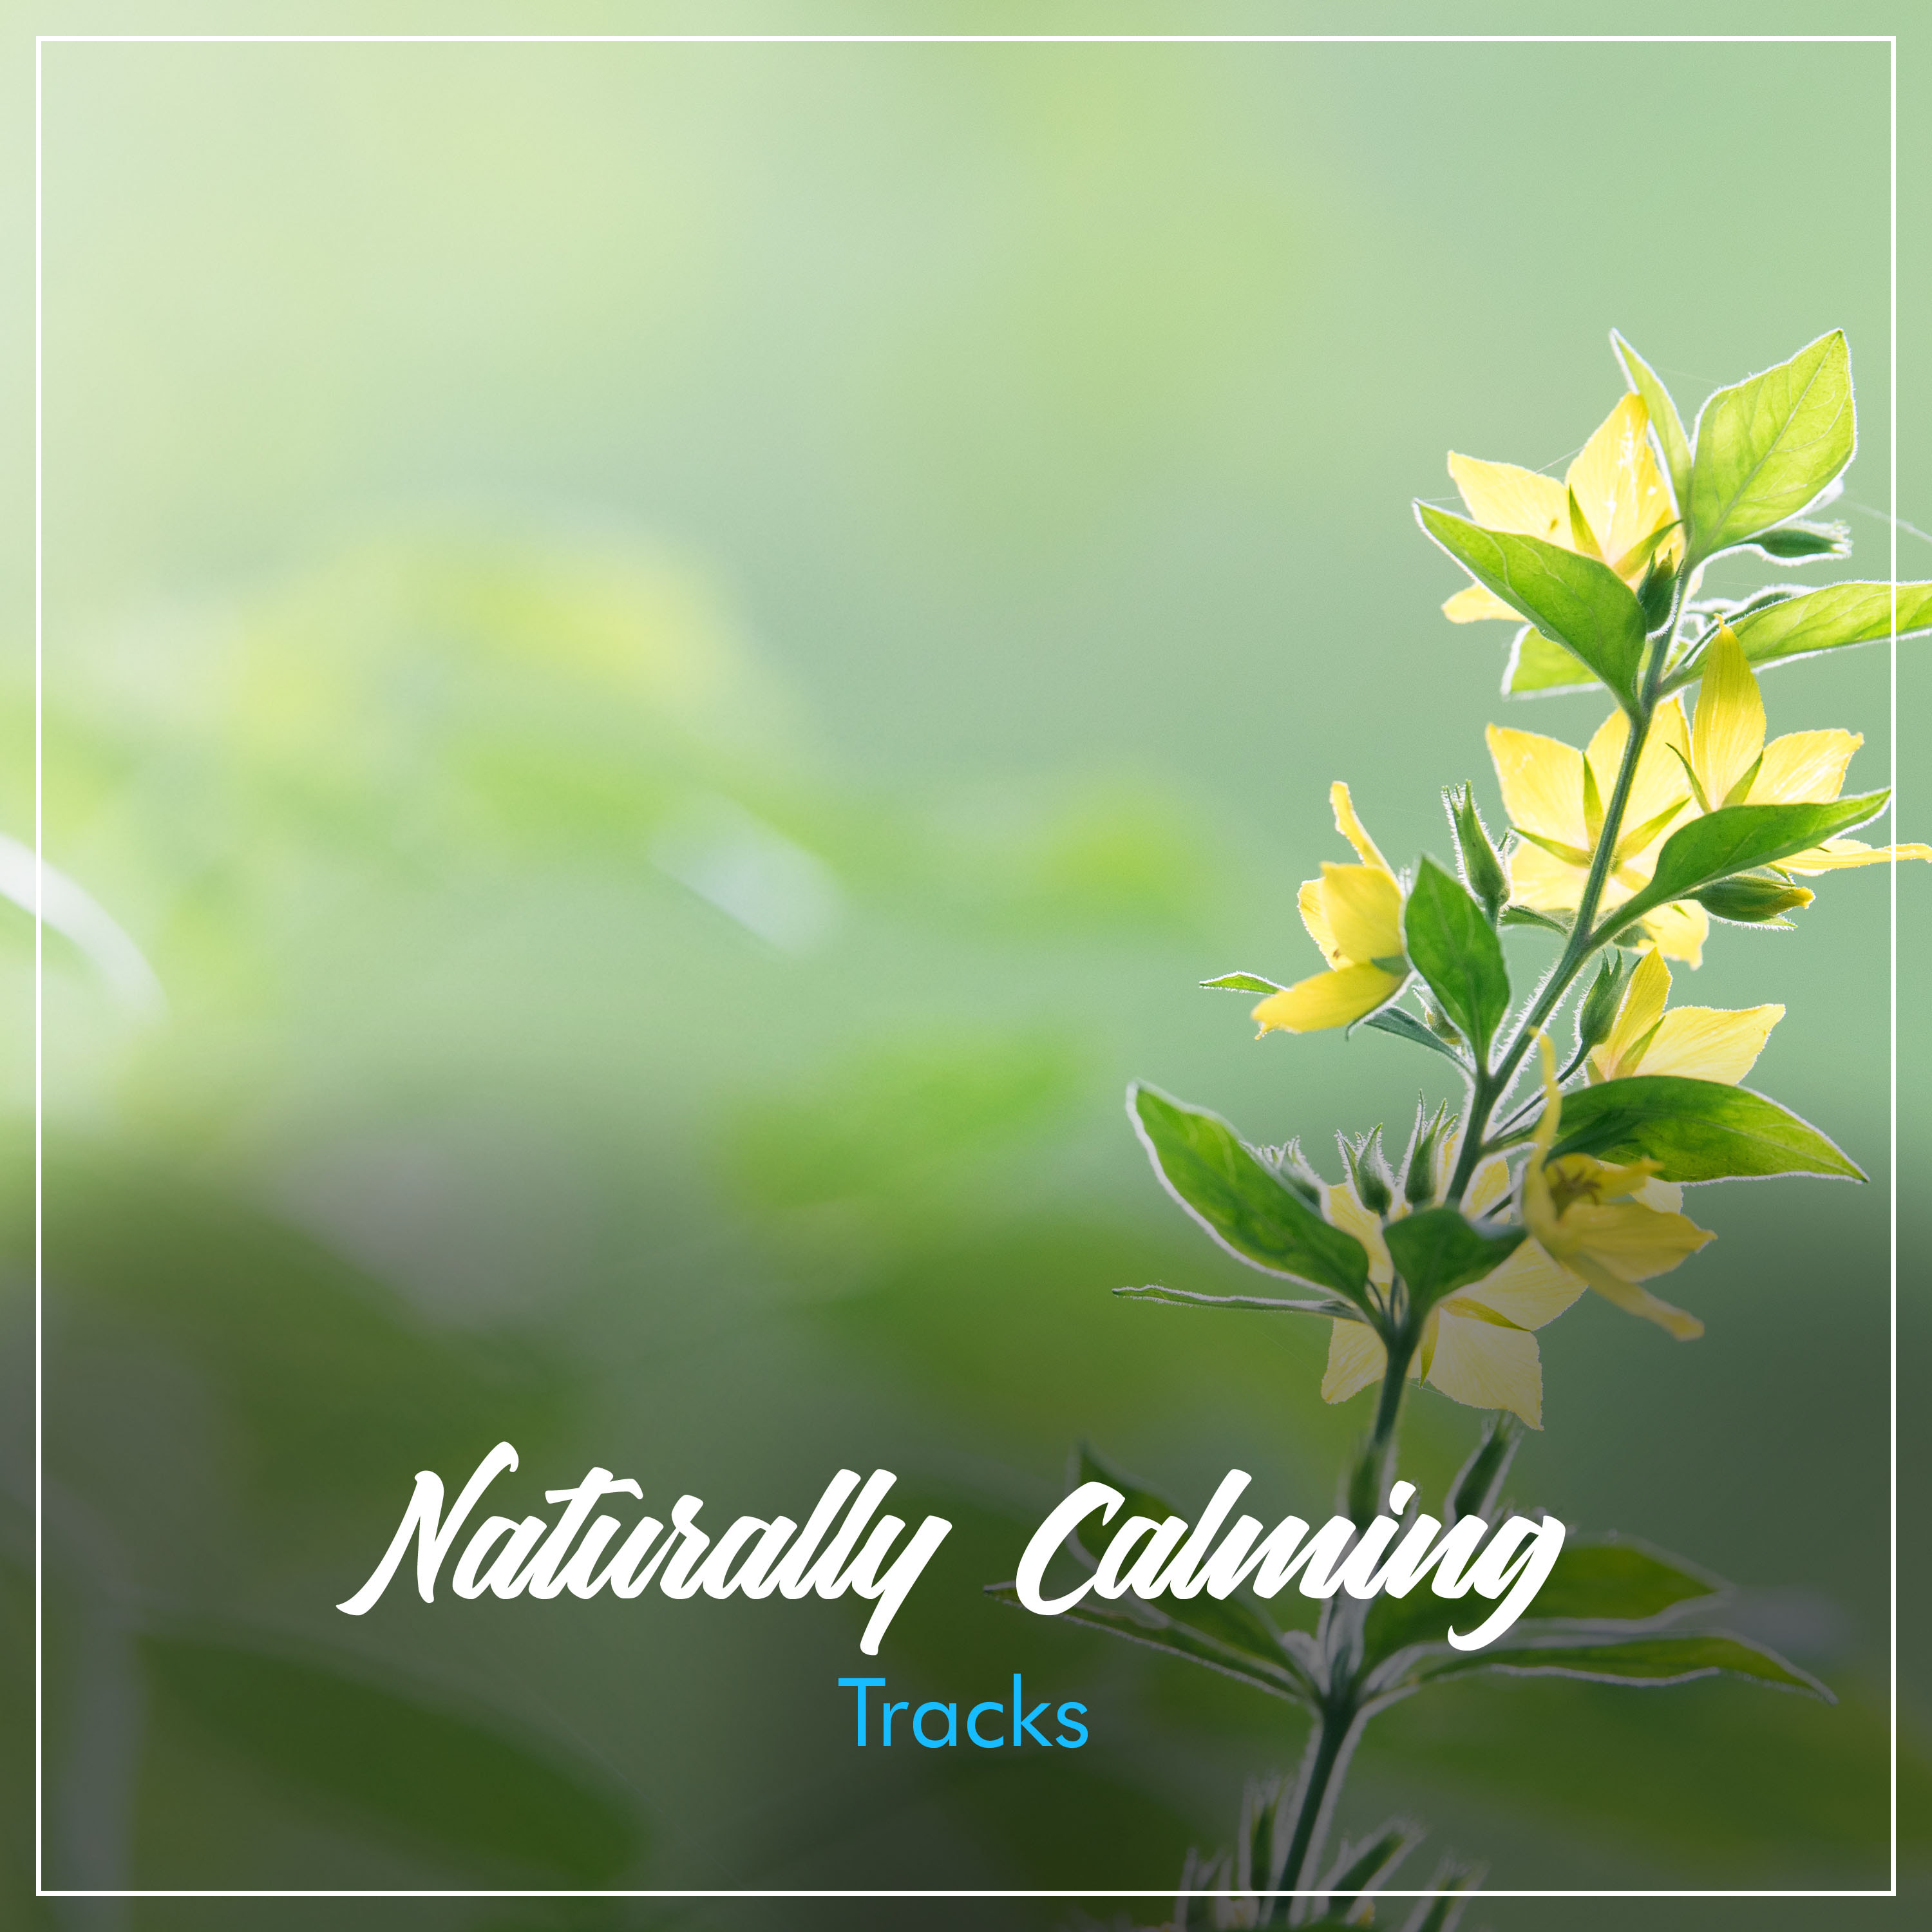 #20 Naturally Calming Tracks for Rejuvenation